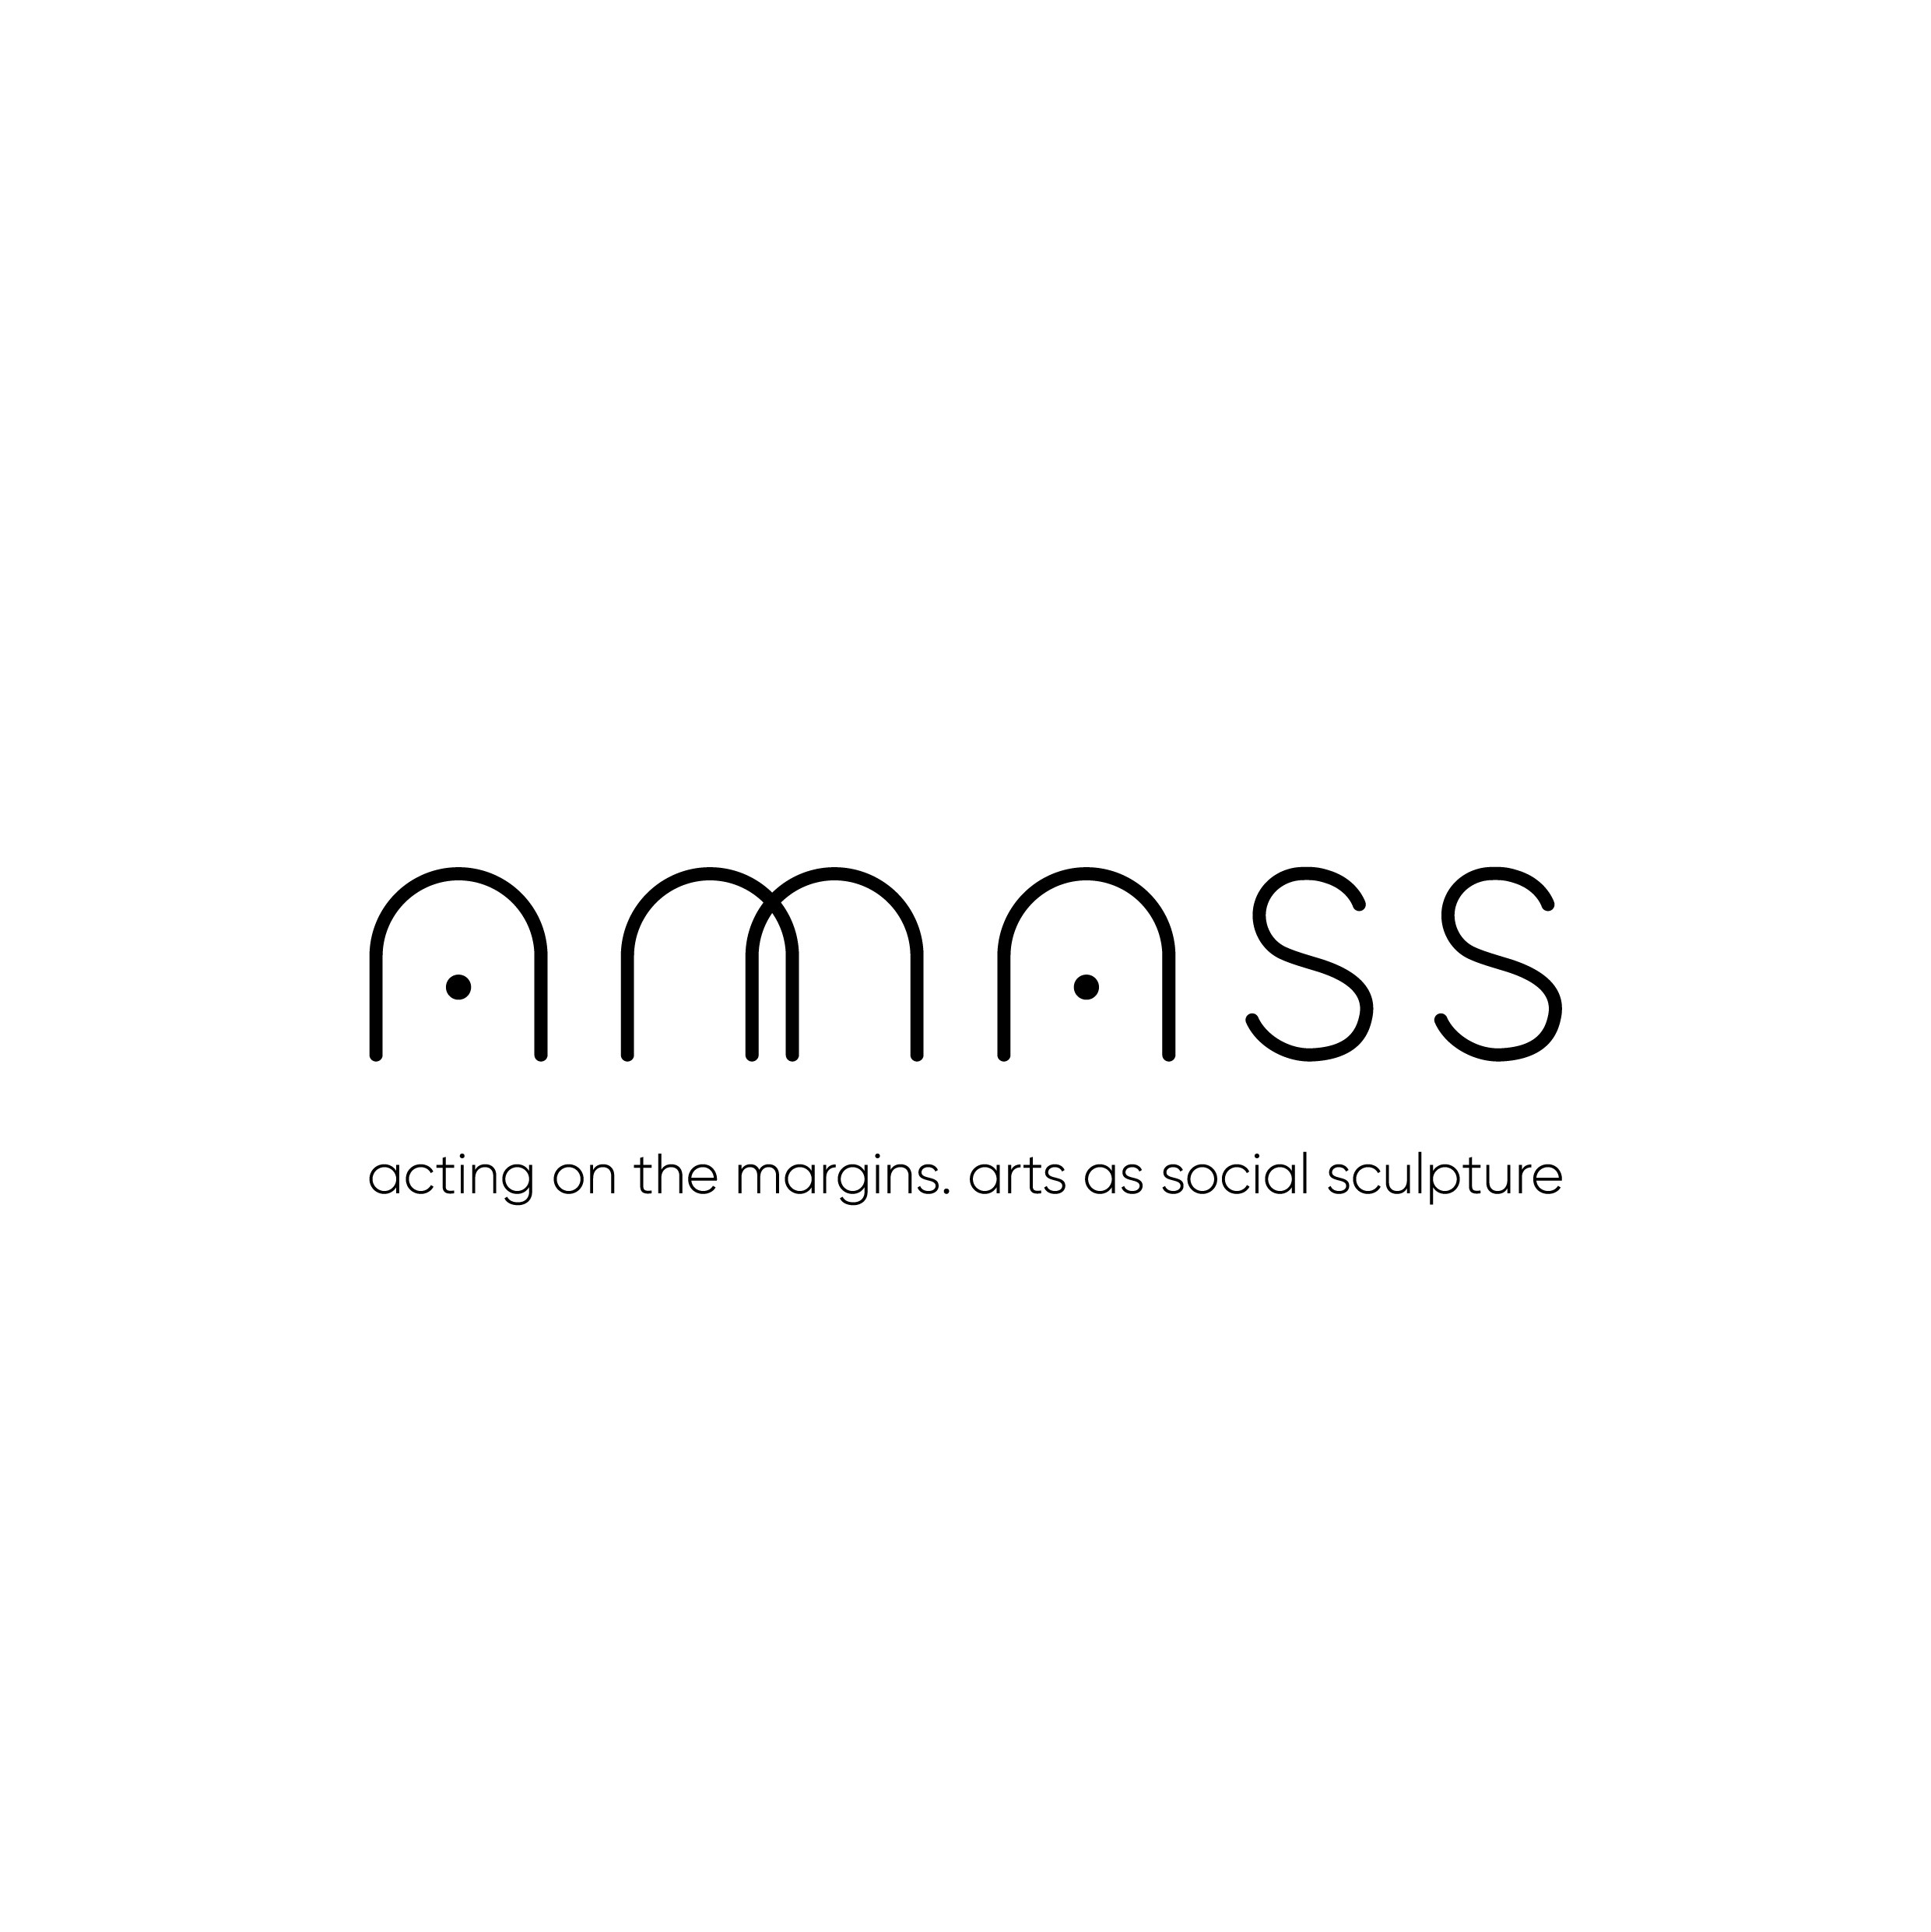 AMASS project